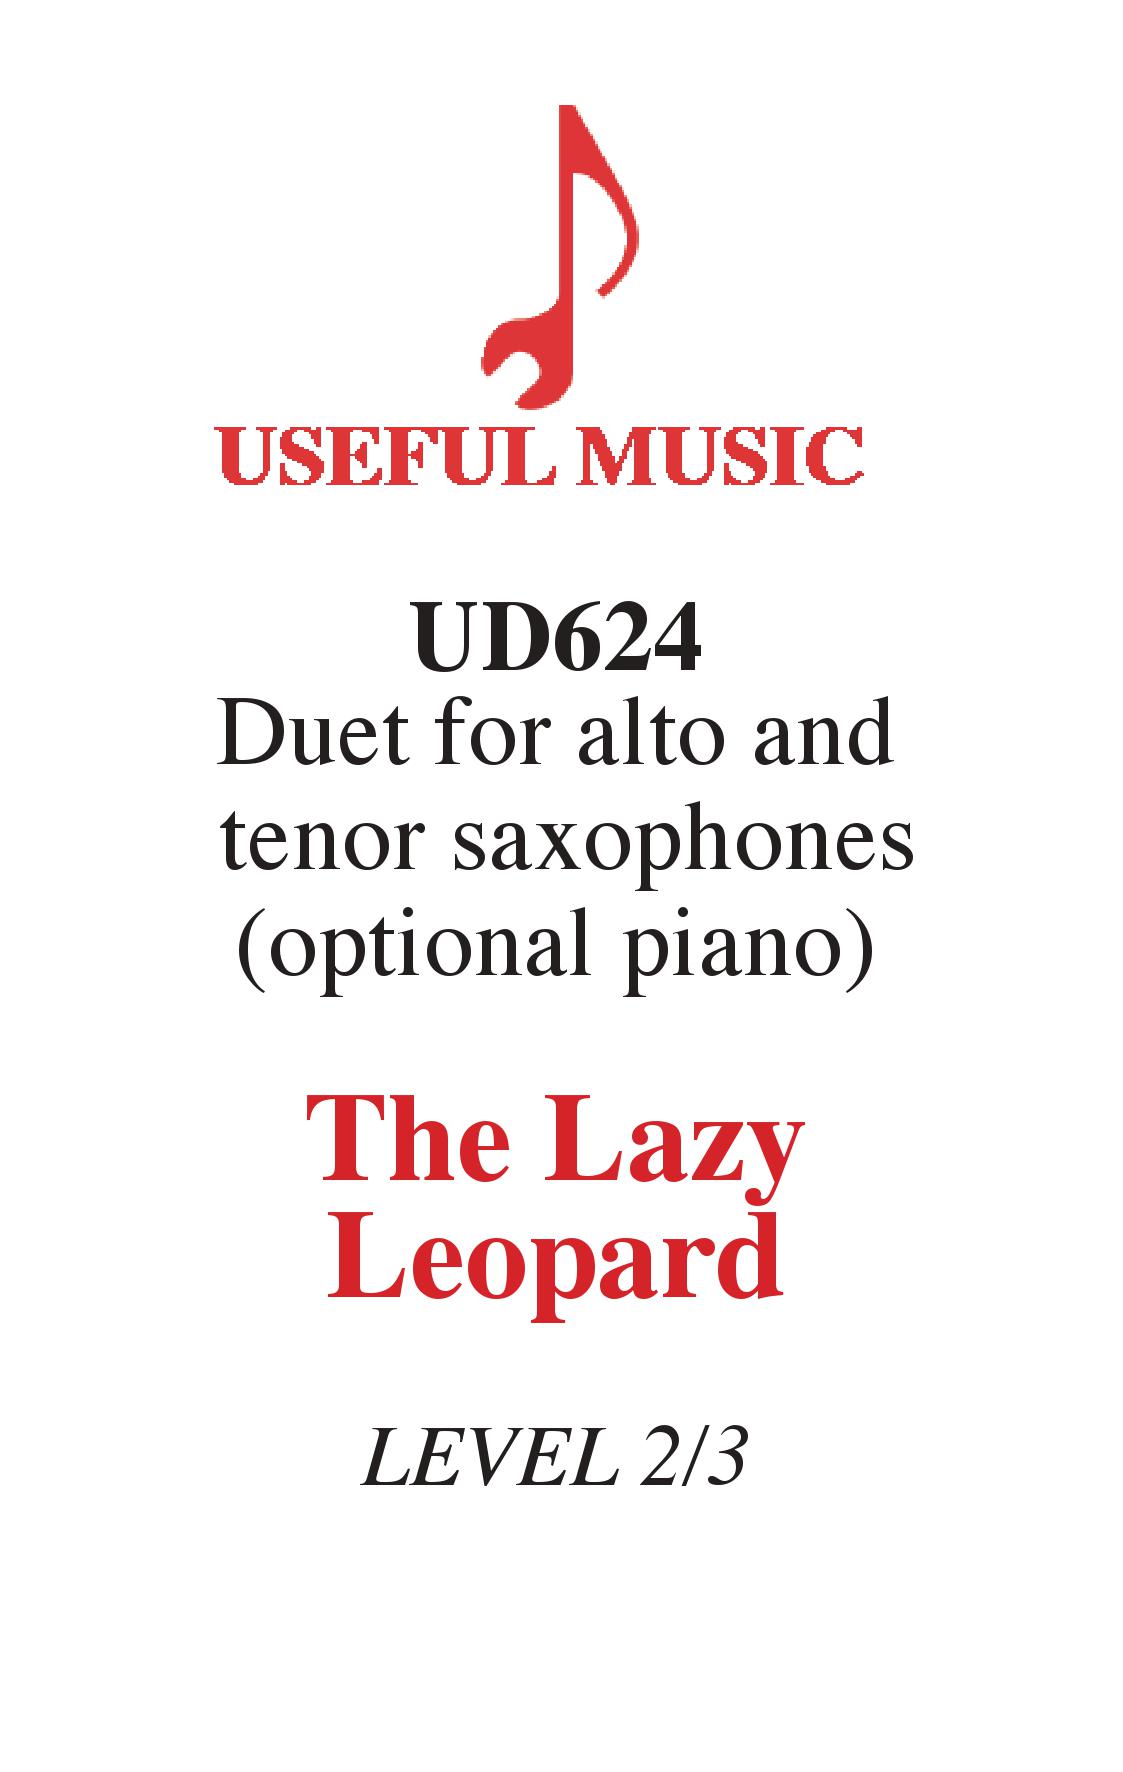 The Lazy Leopard - saxophone duet